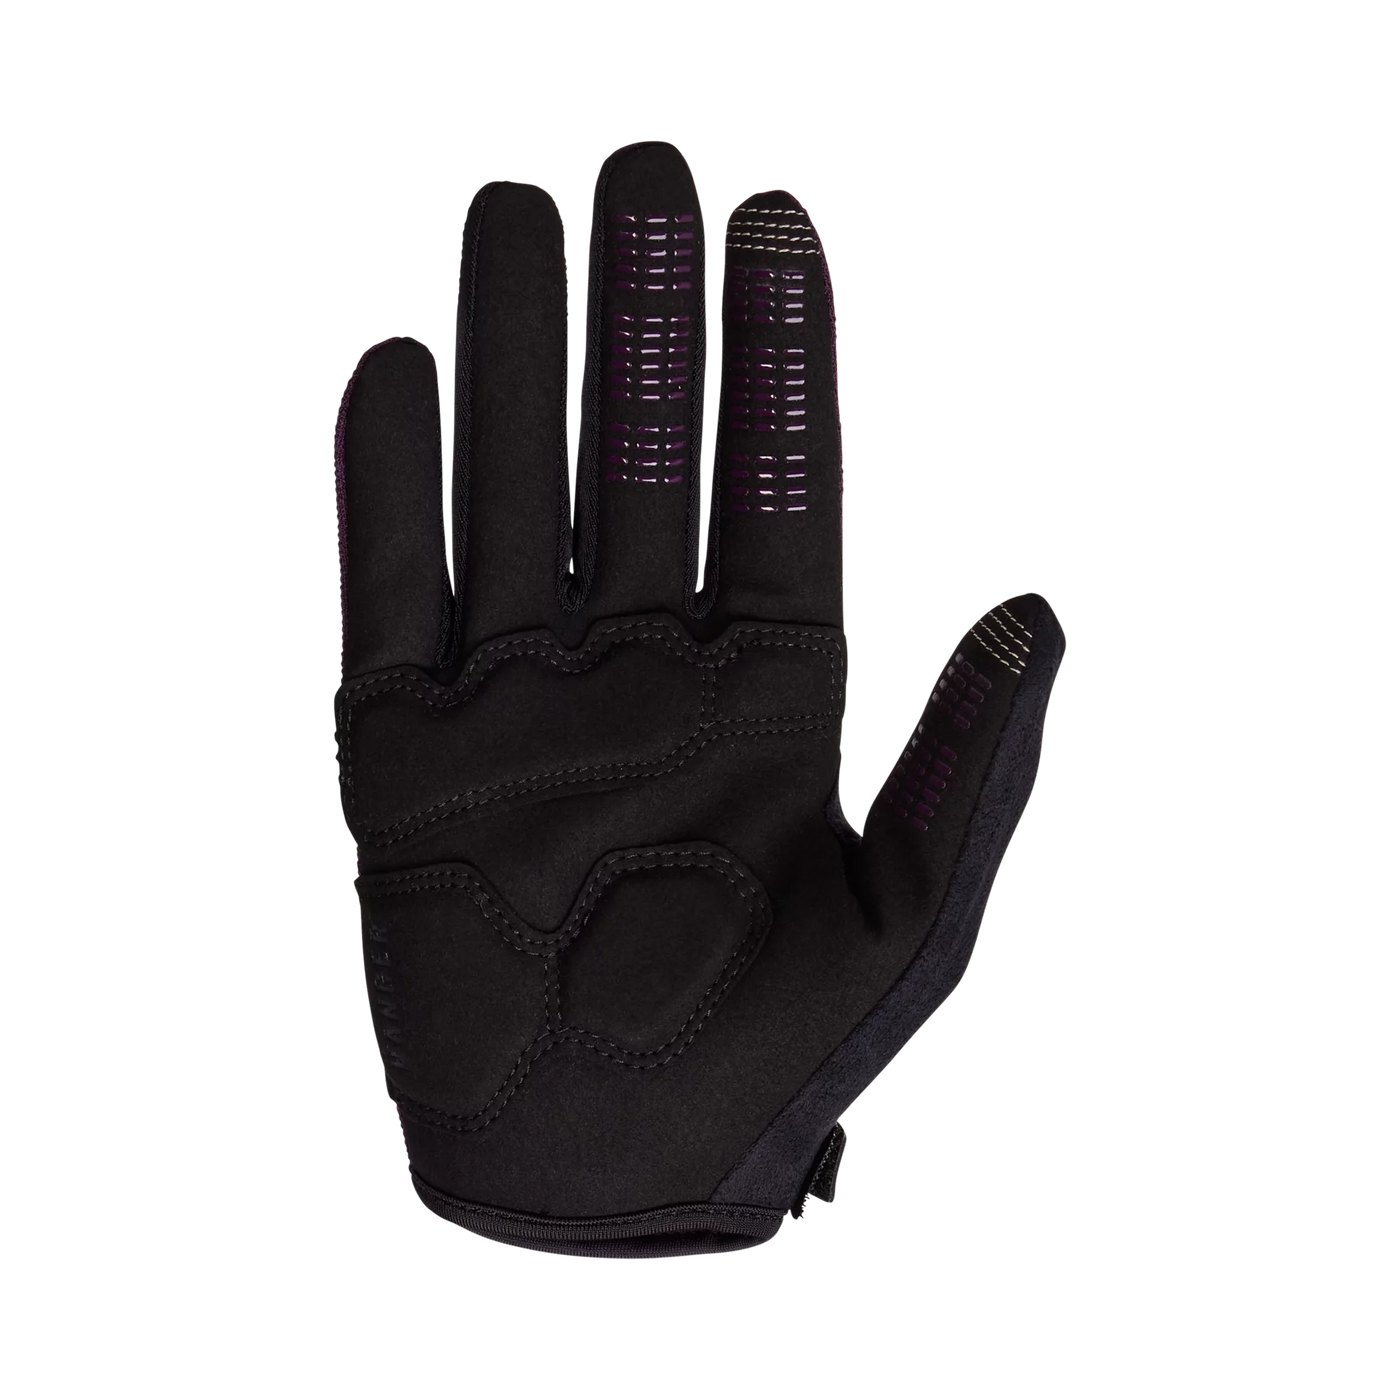 Ranger Gel Glove (Women's)